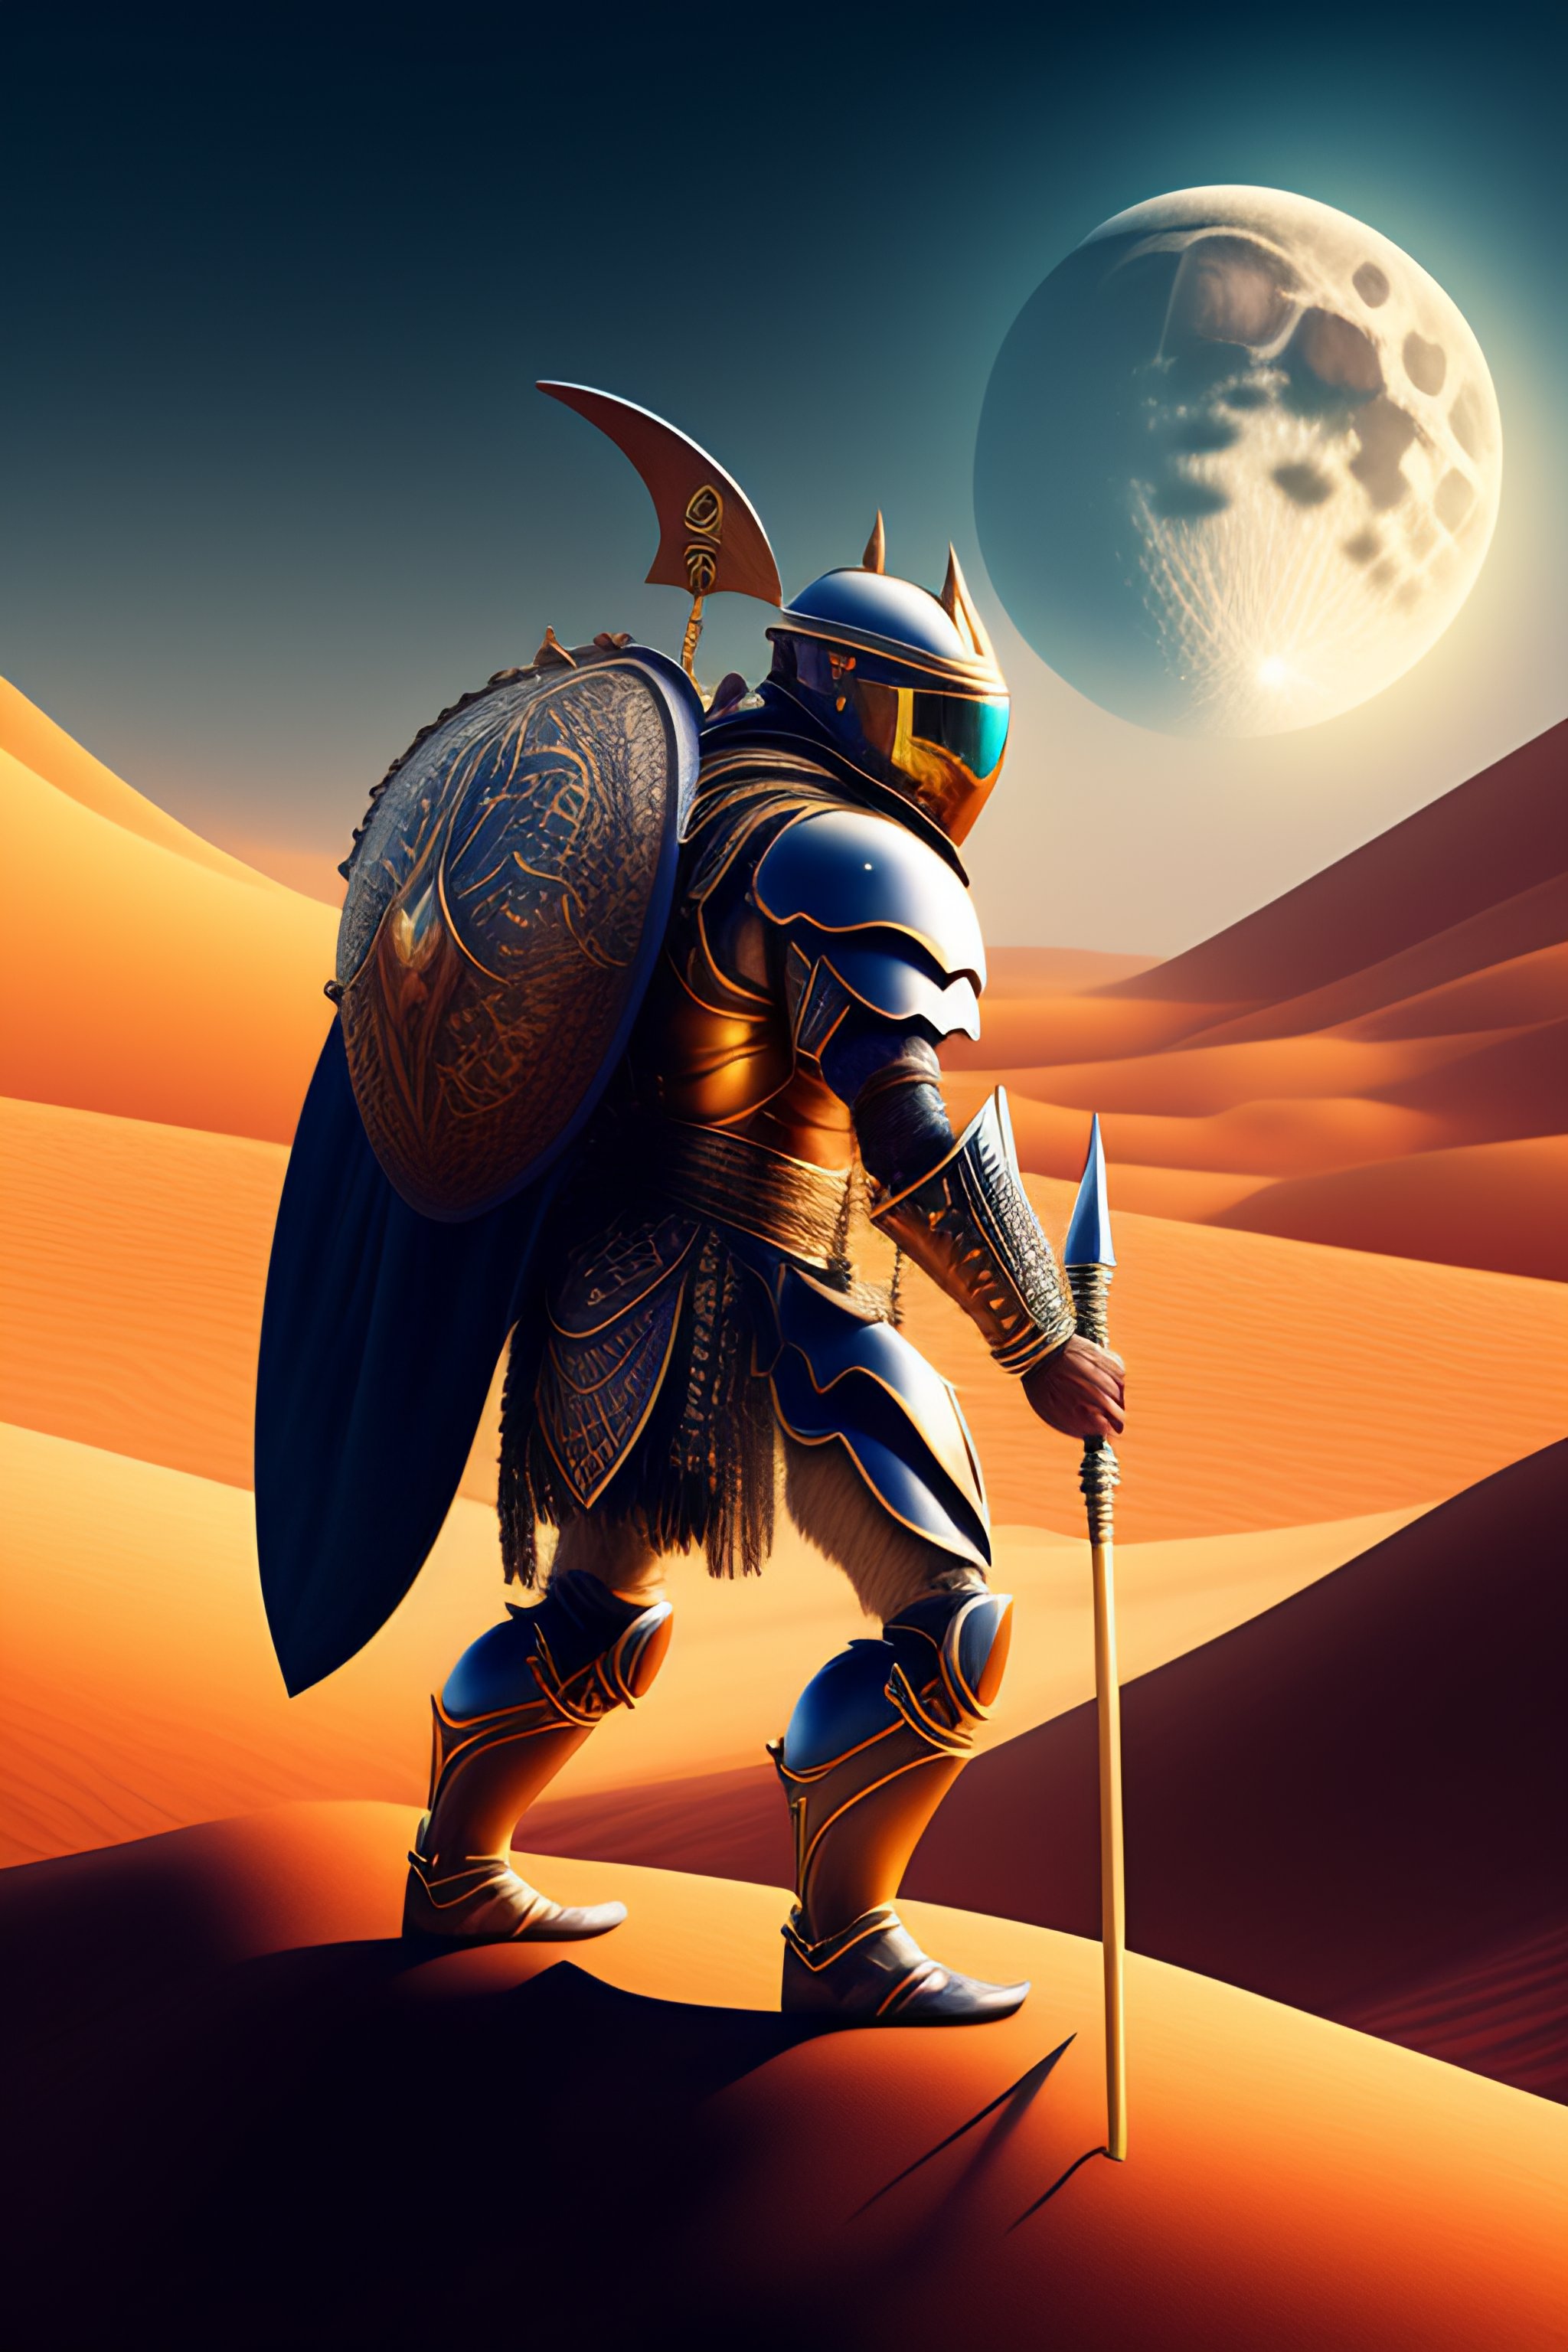 Lexica - A crab bonemold warrior holding a spear in the desert